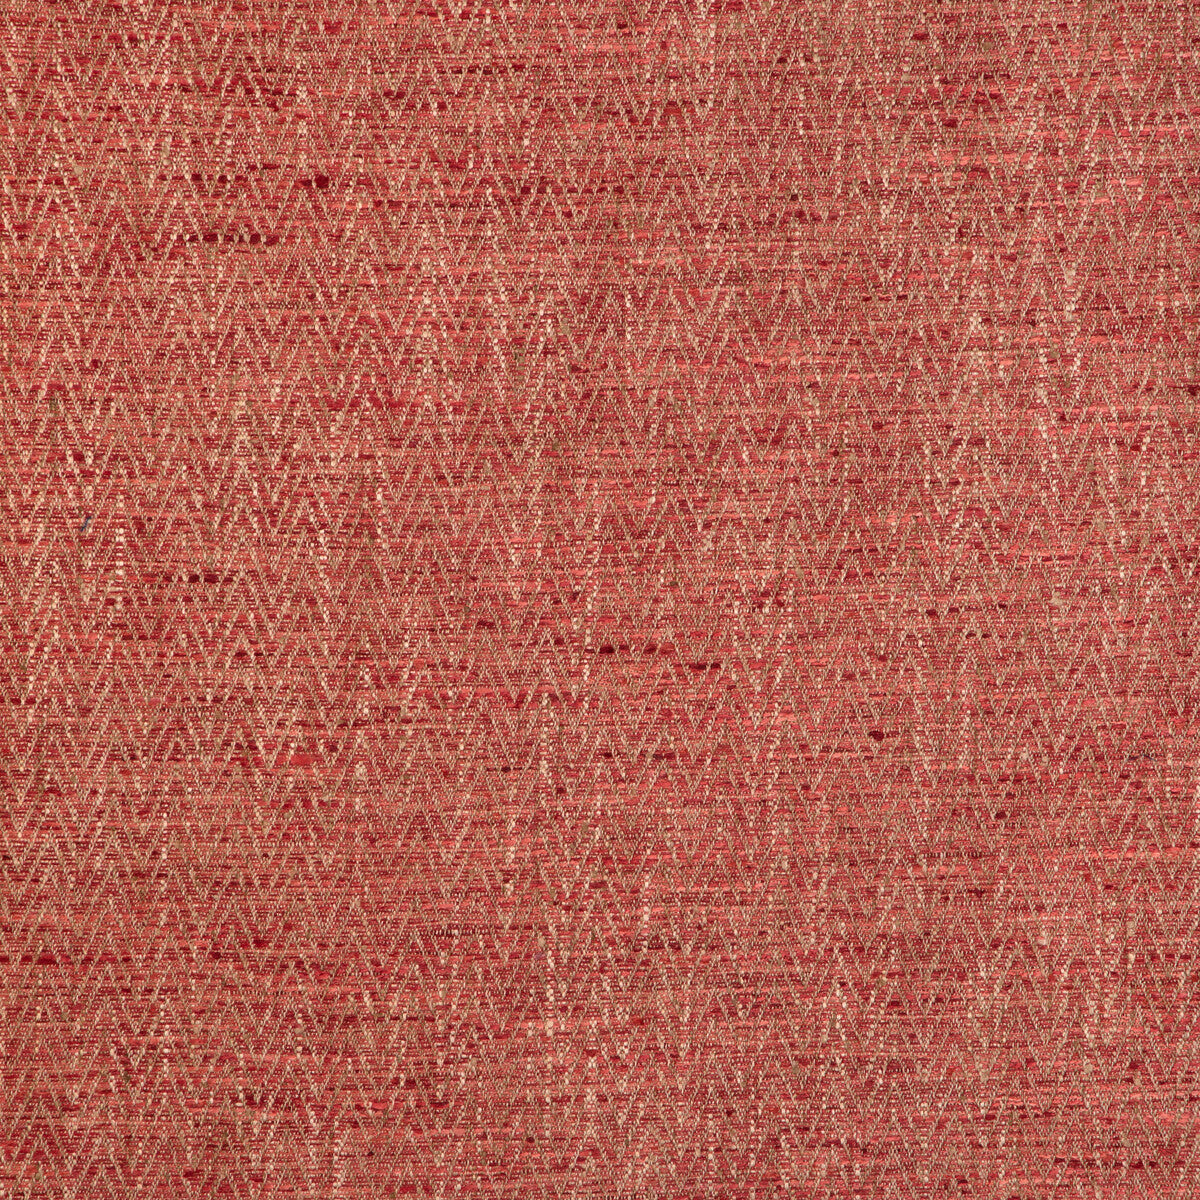 Kravet Smart fabric in 34092-24 color - pattern 34092.24.0 - by Kravet Smart